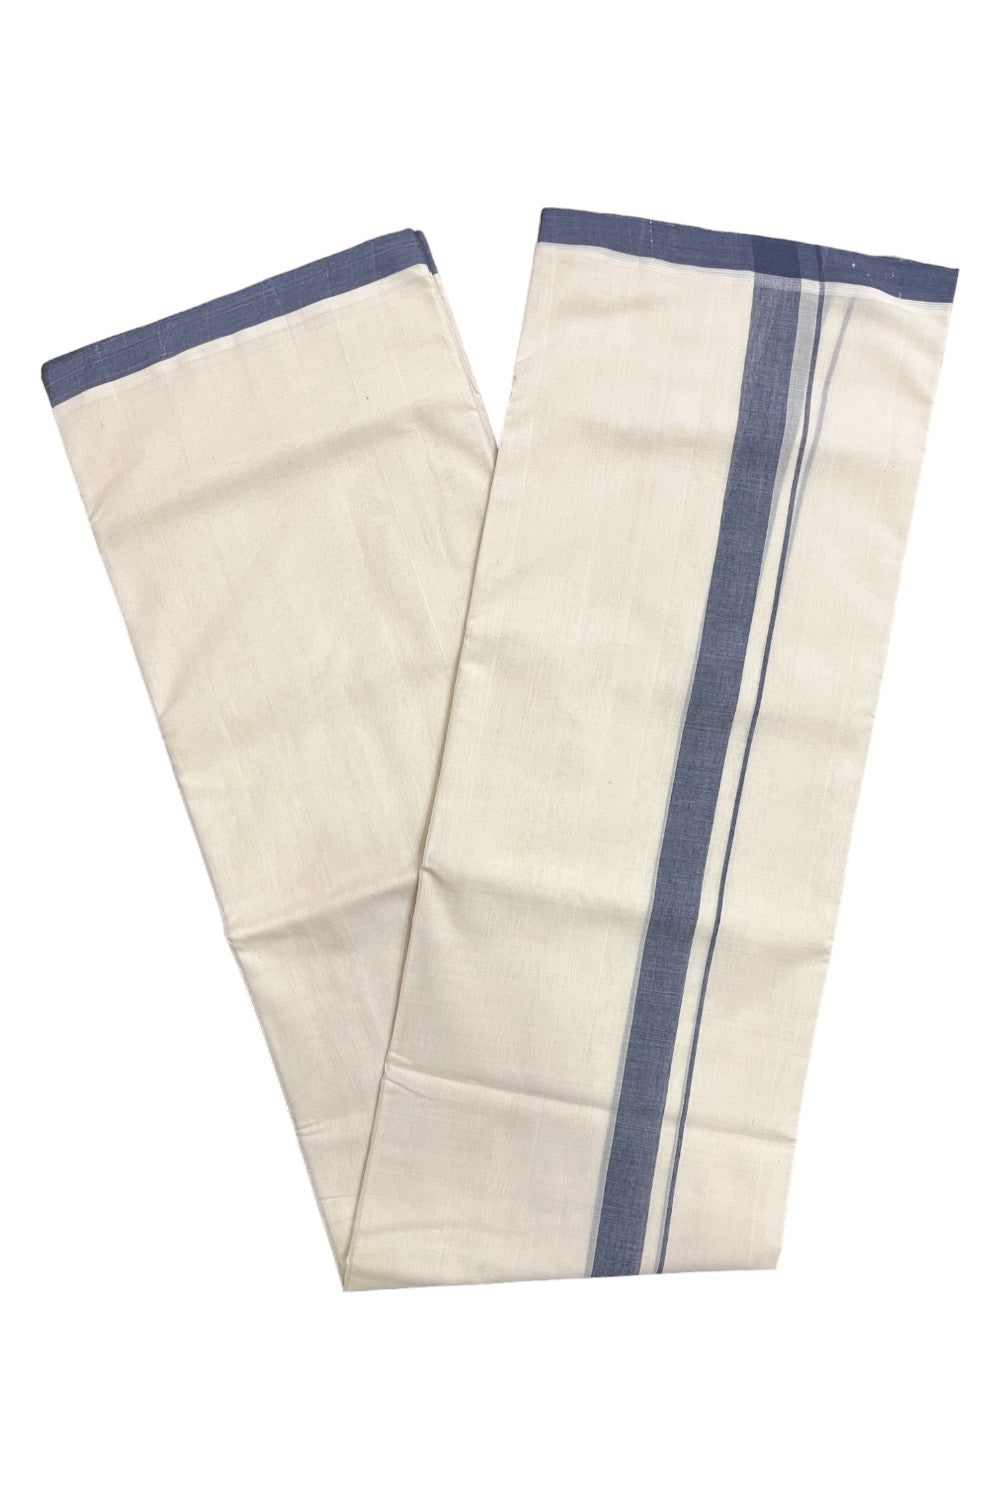 Premium Balaramapuram Handloom Unakkupaavu Cotton Double Mundu with Grey Border